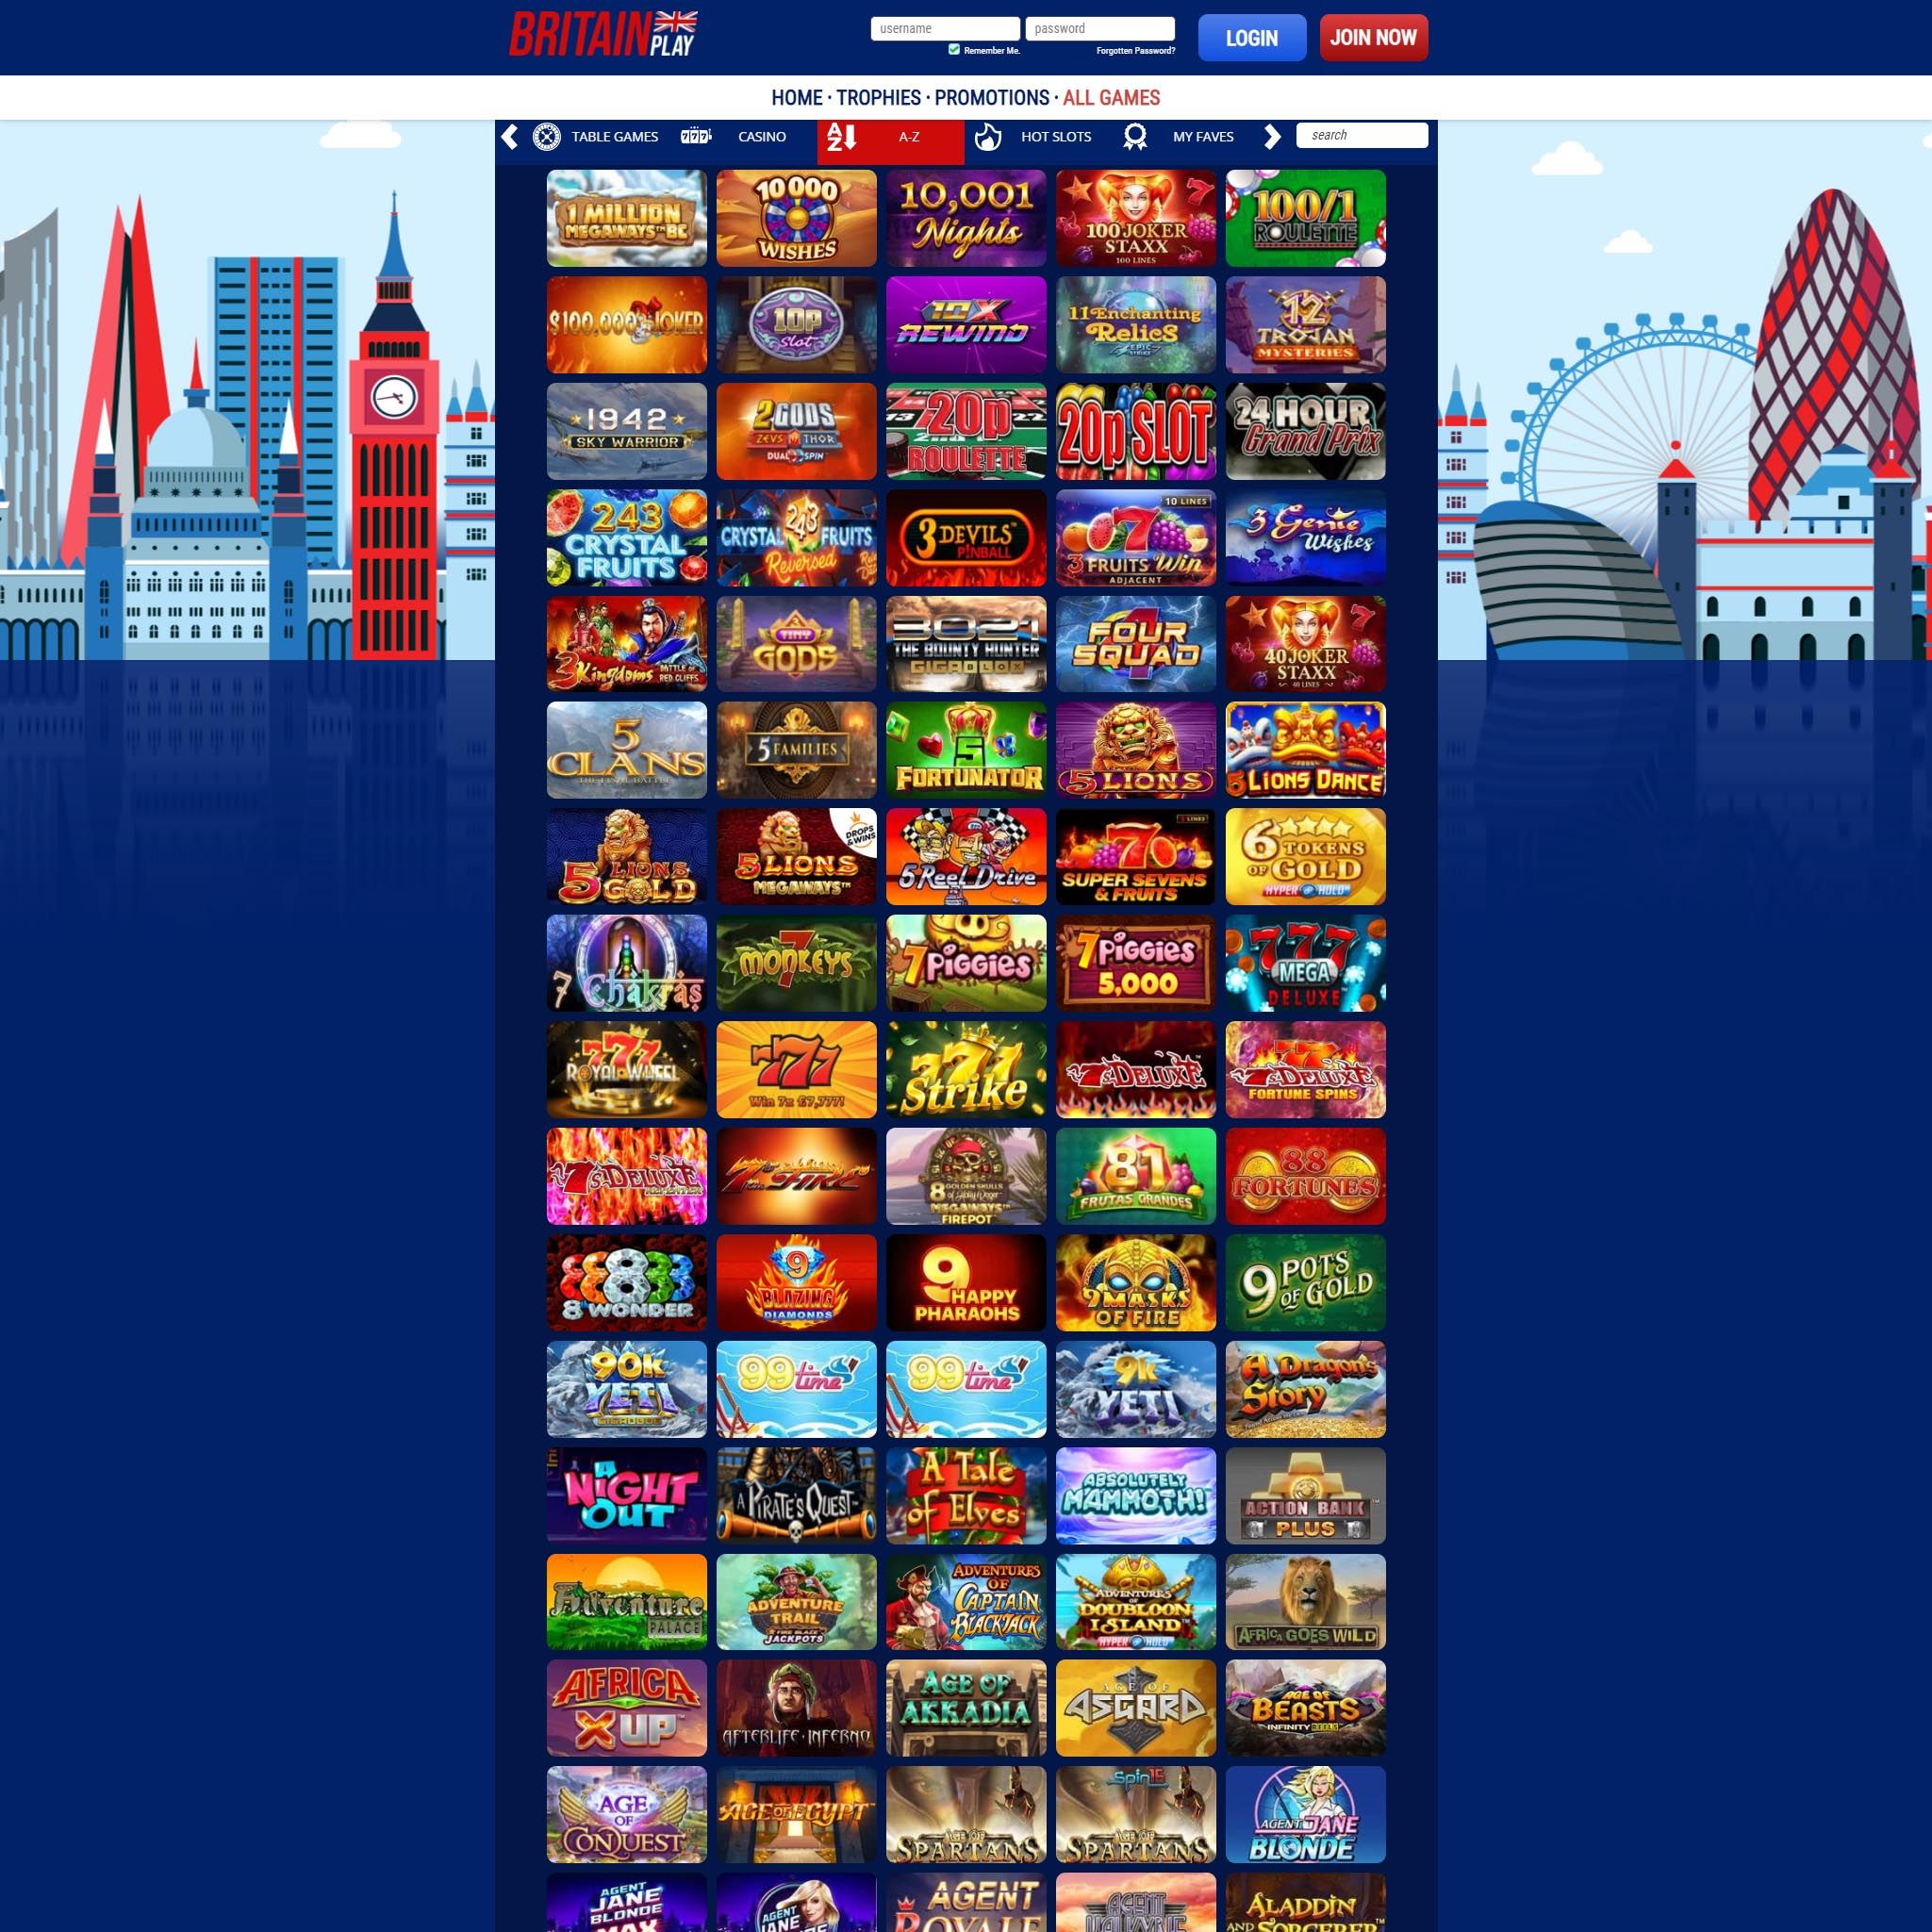 BritainPlay full games catalogue